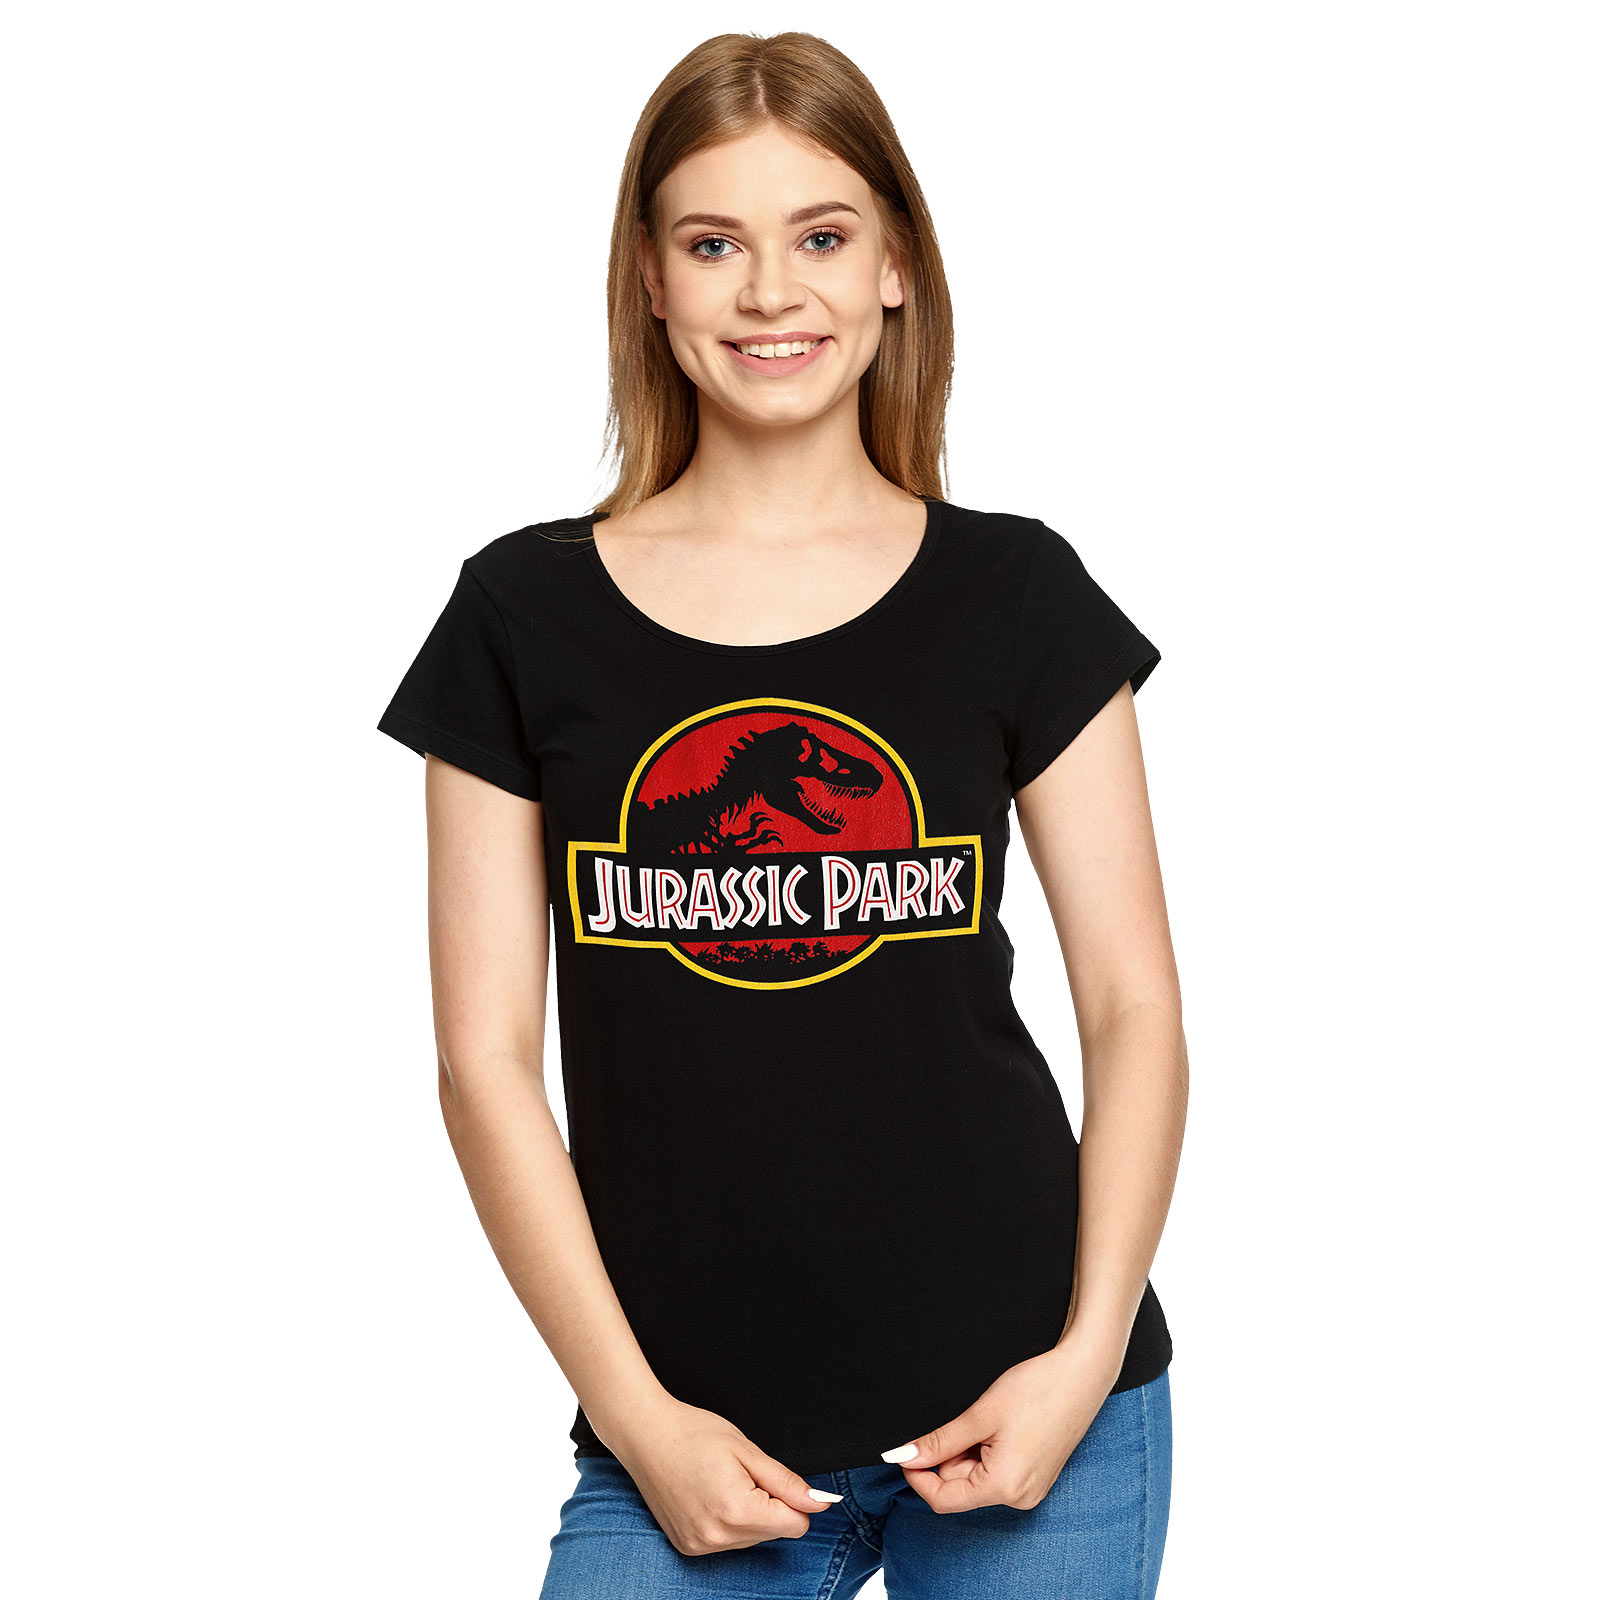 Jurassic Park - T-shirt logo femme noir